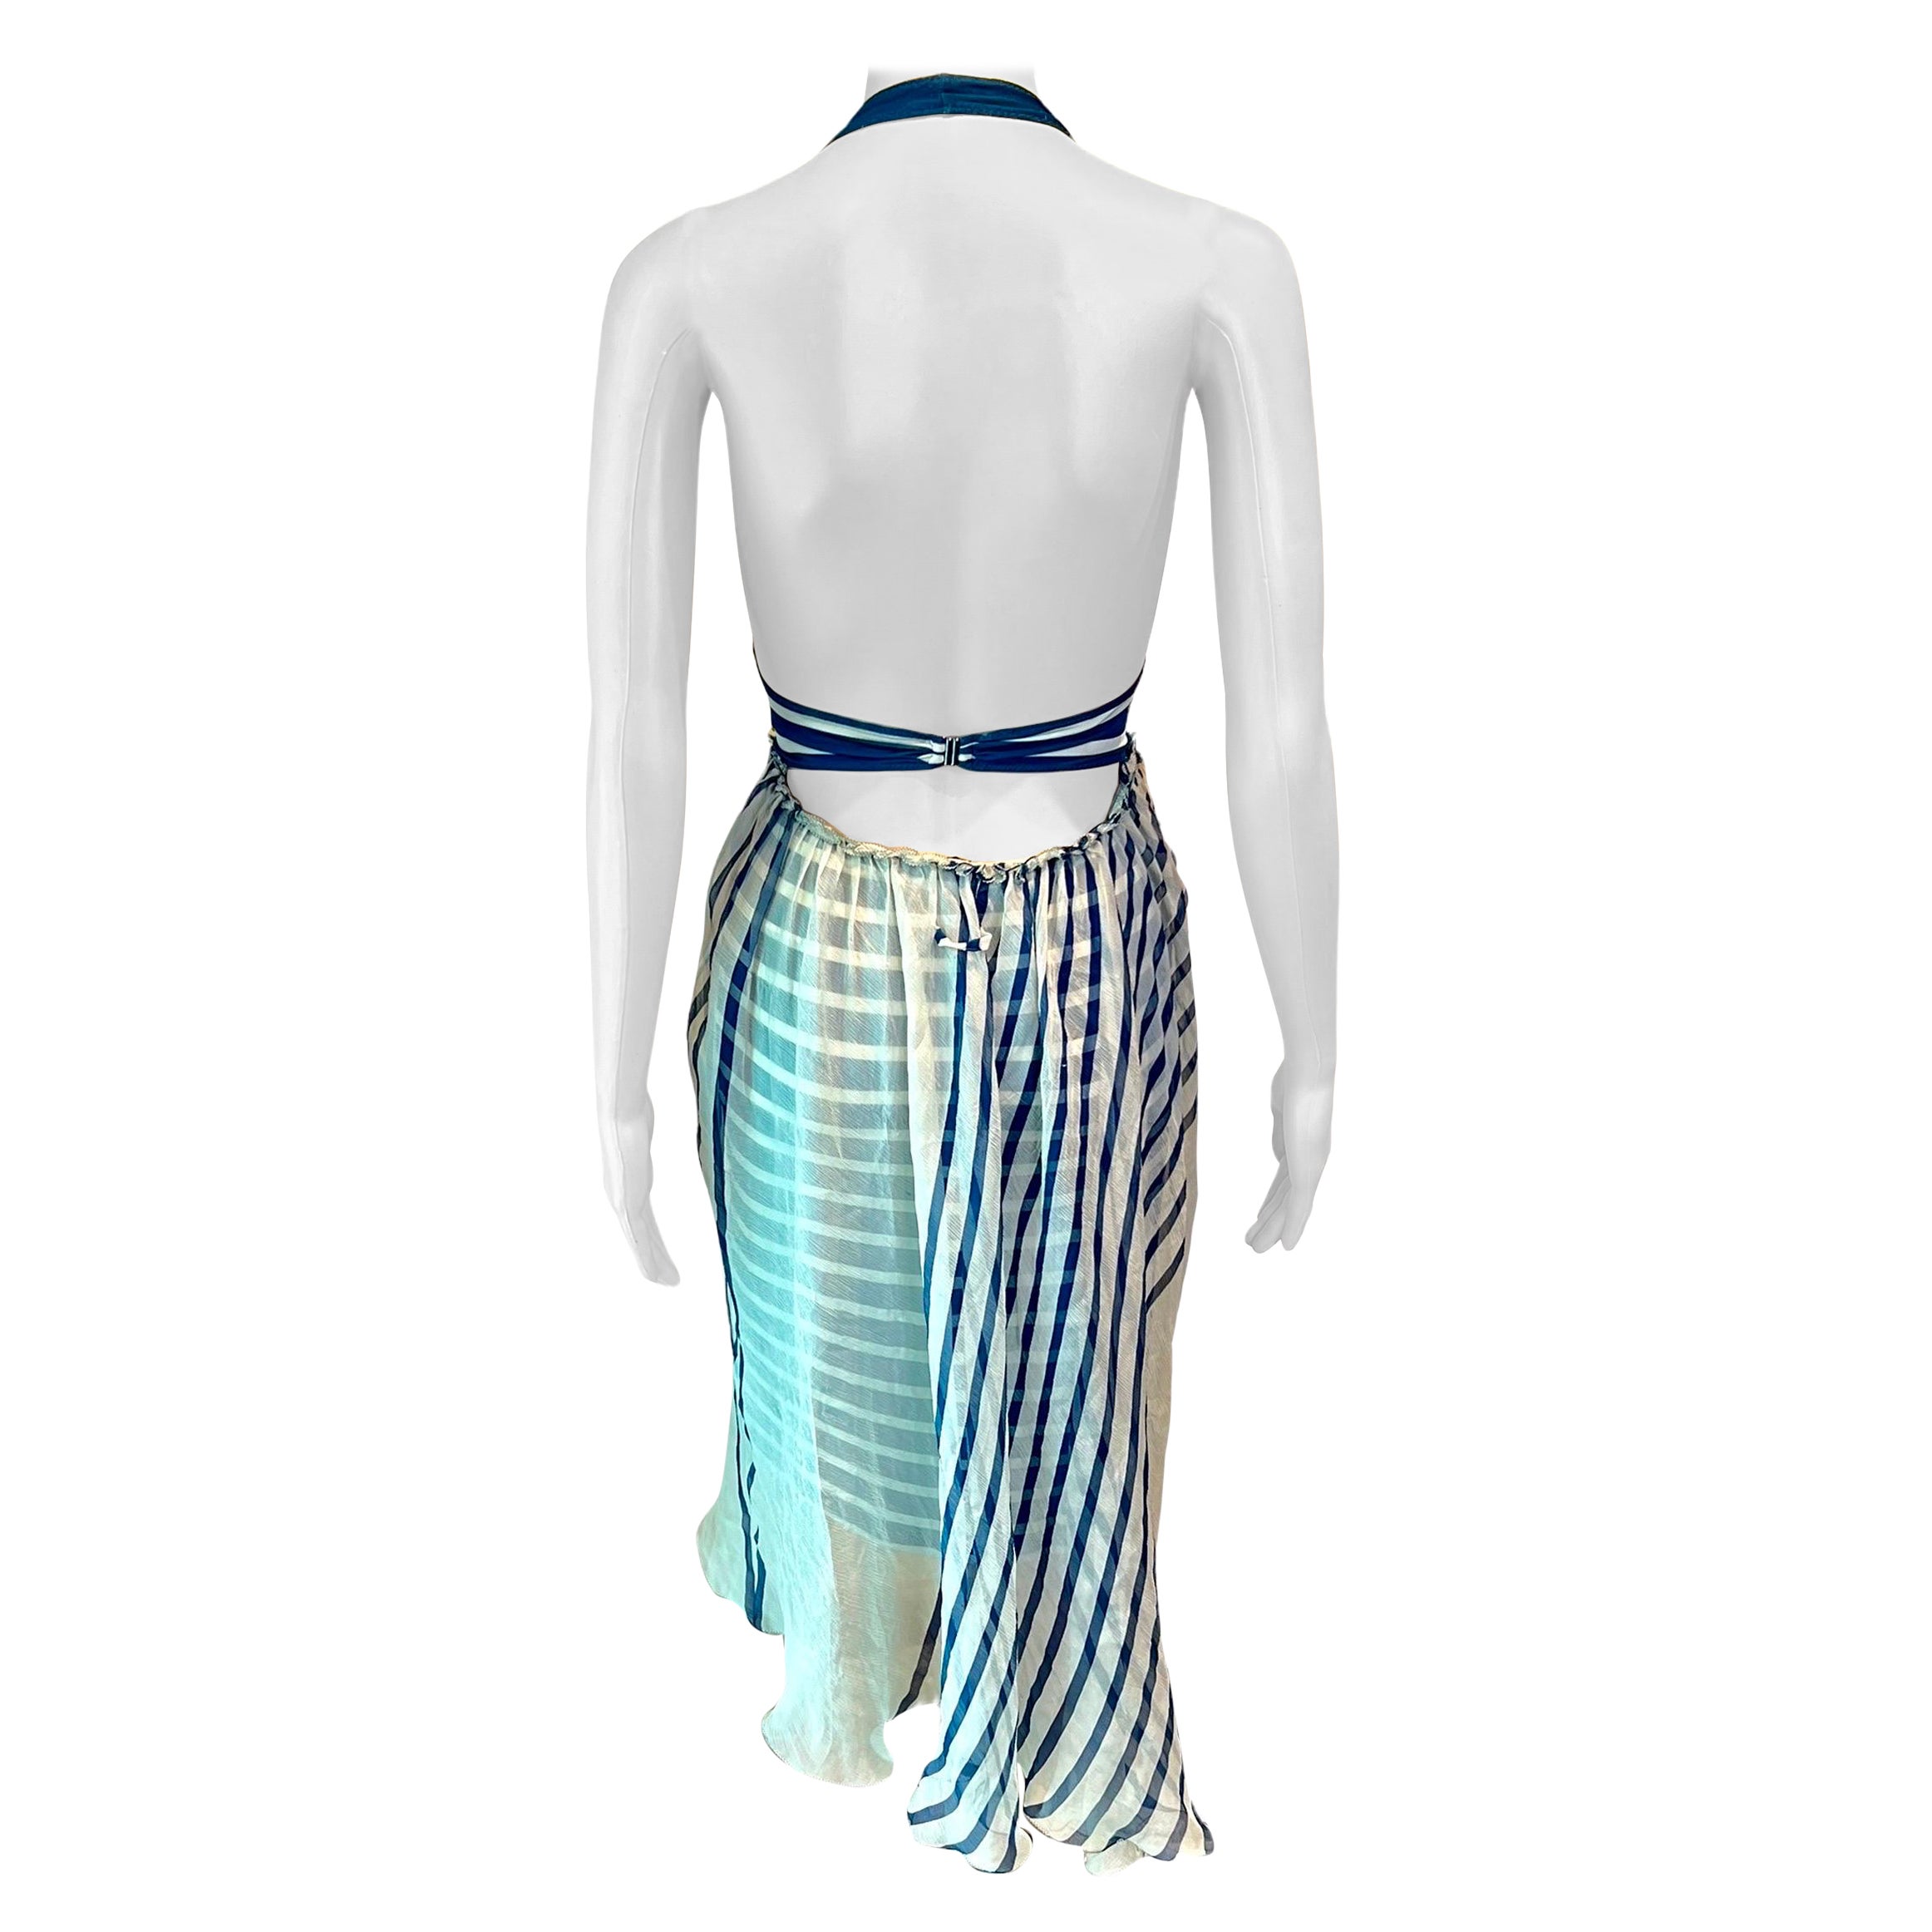 Jean Paul Gaultier Soleil S/S 2001 Striped Ivory & Navy Blue Cutout Back Dress 